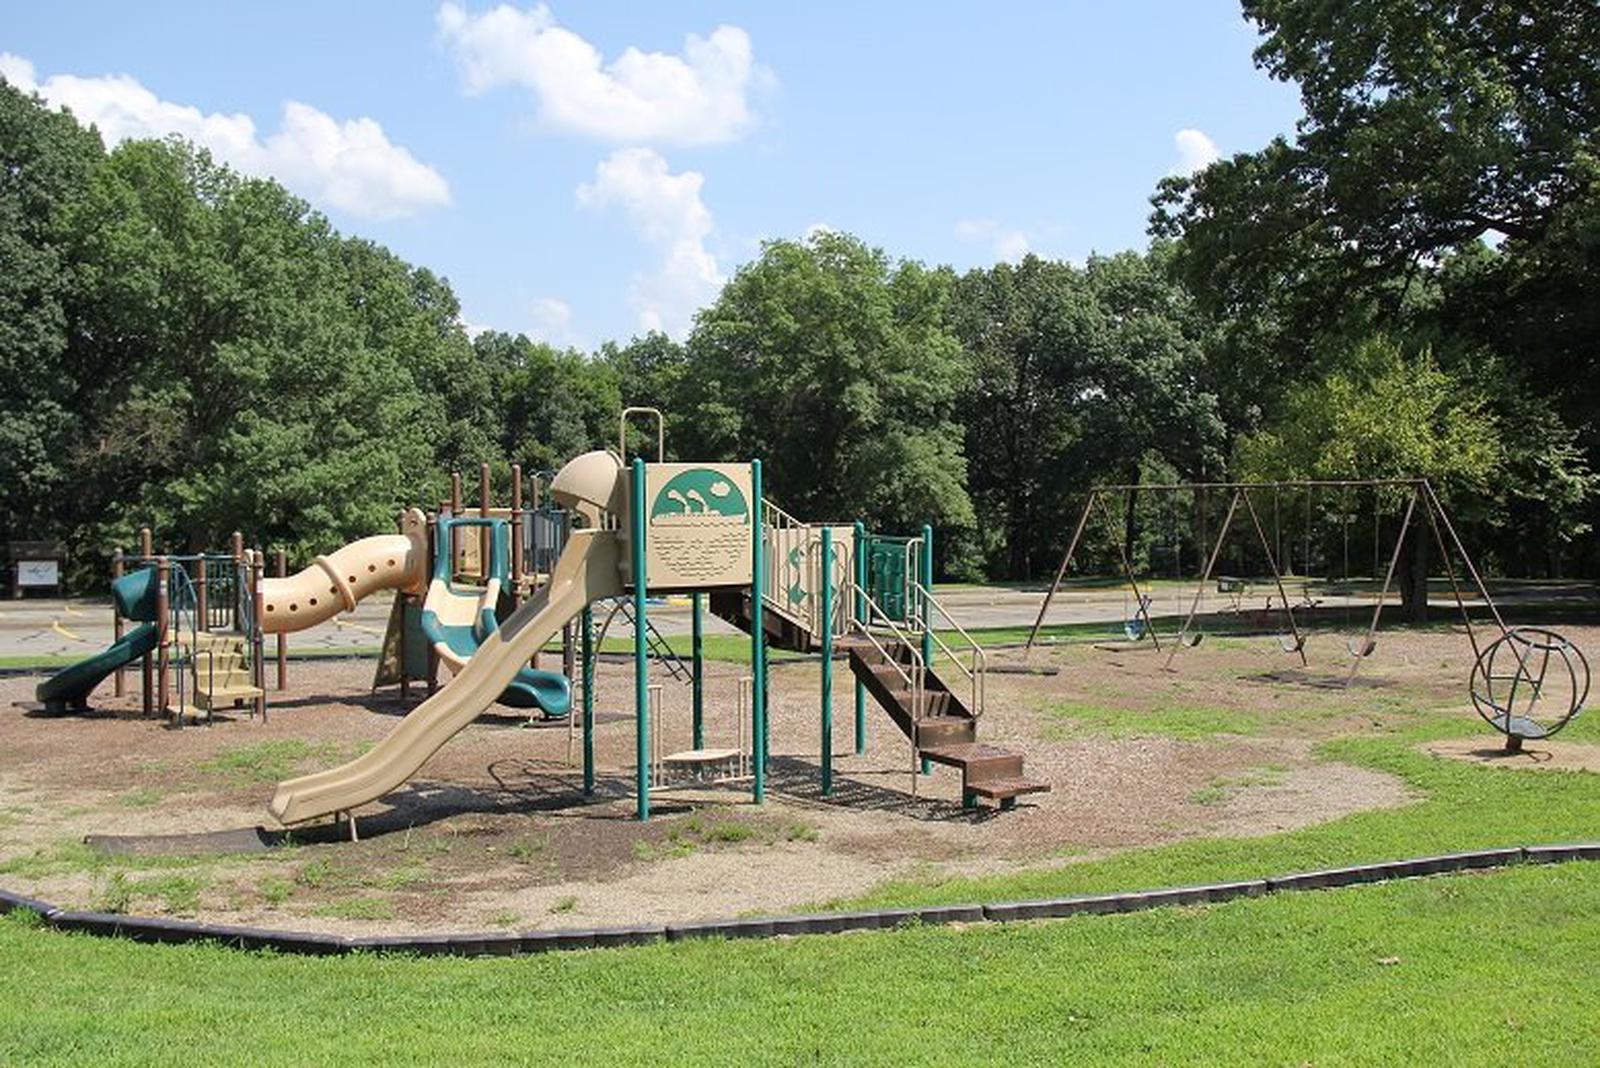 Conemaugh PlaygroundConemaugh's playground is located next to the pavilions.